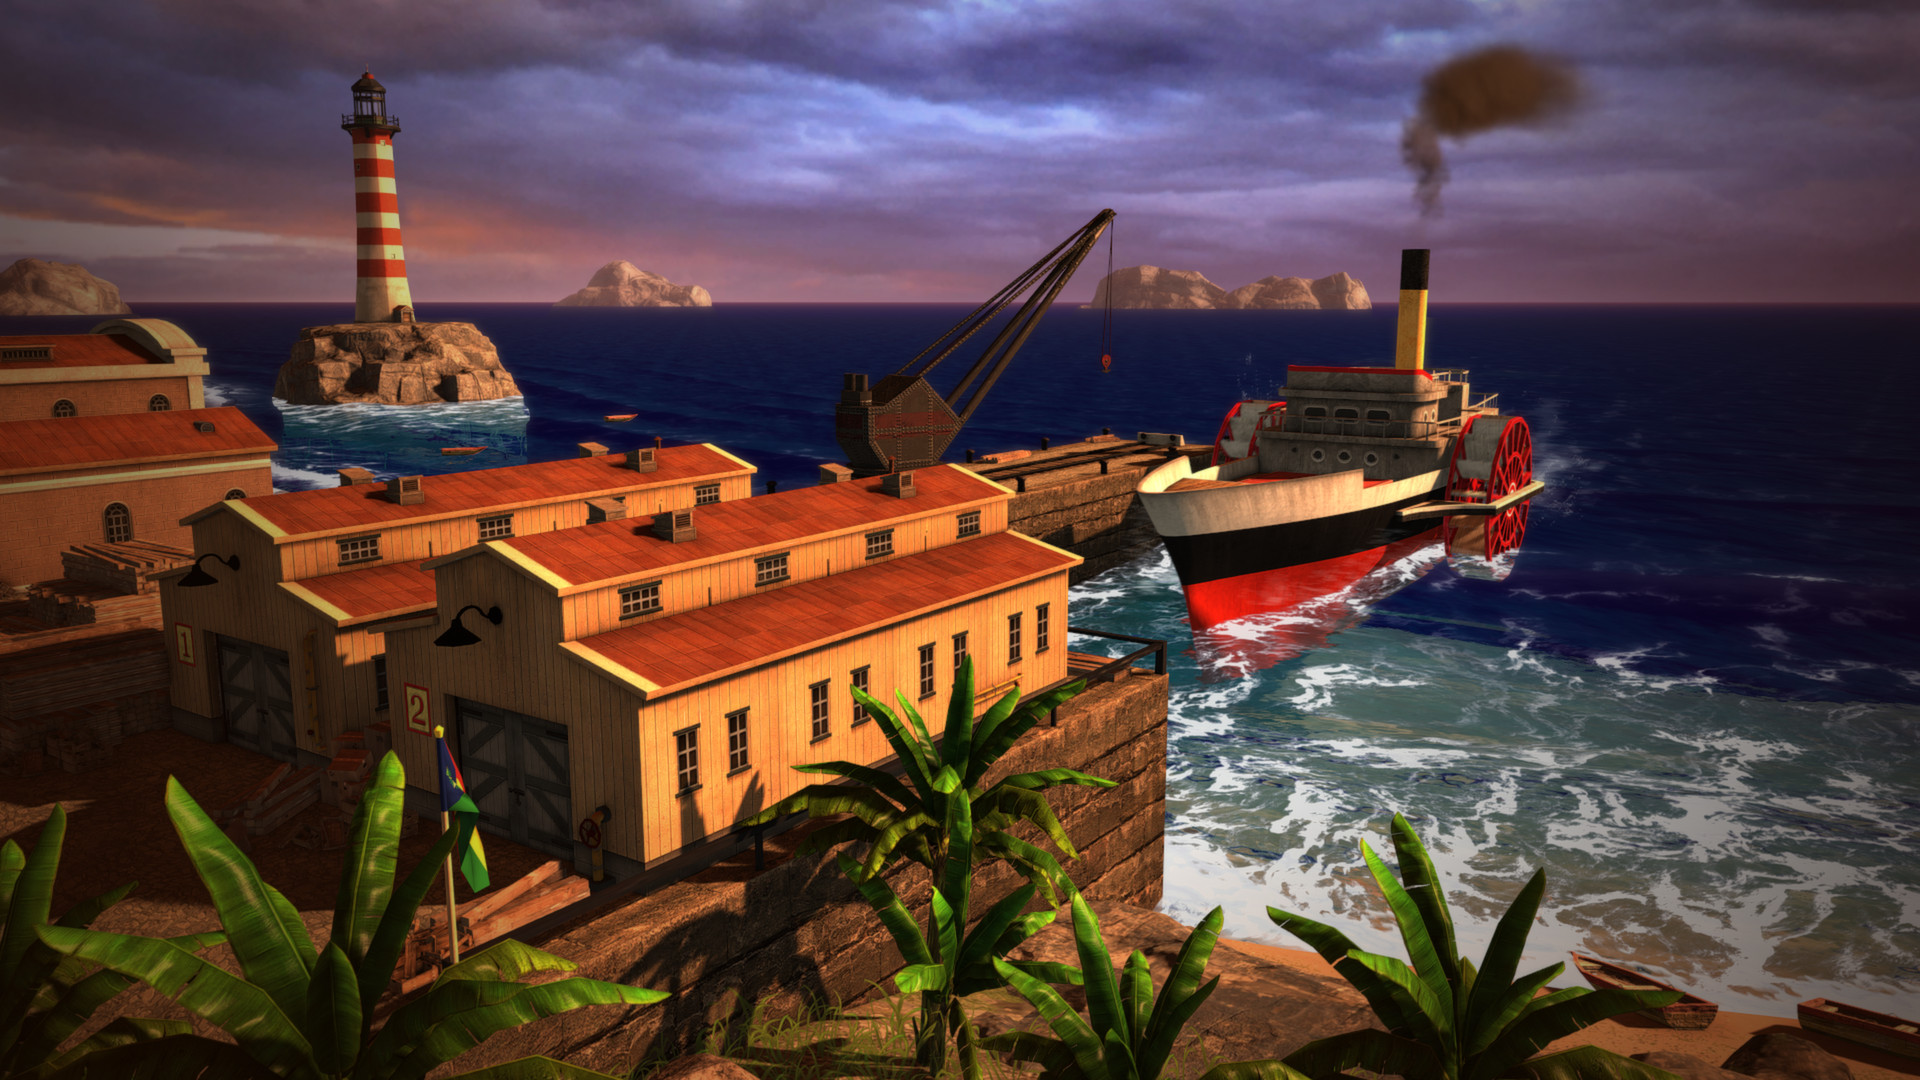 Tropico 5 Steam Gift